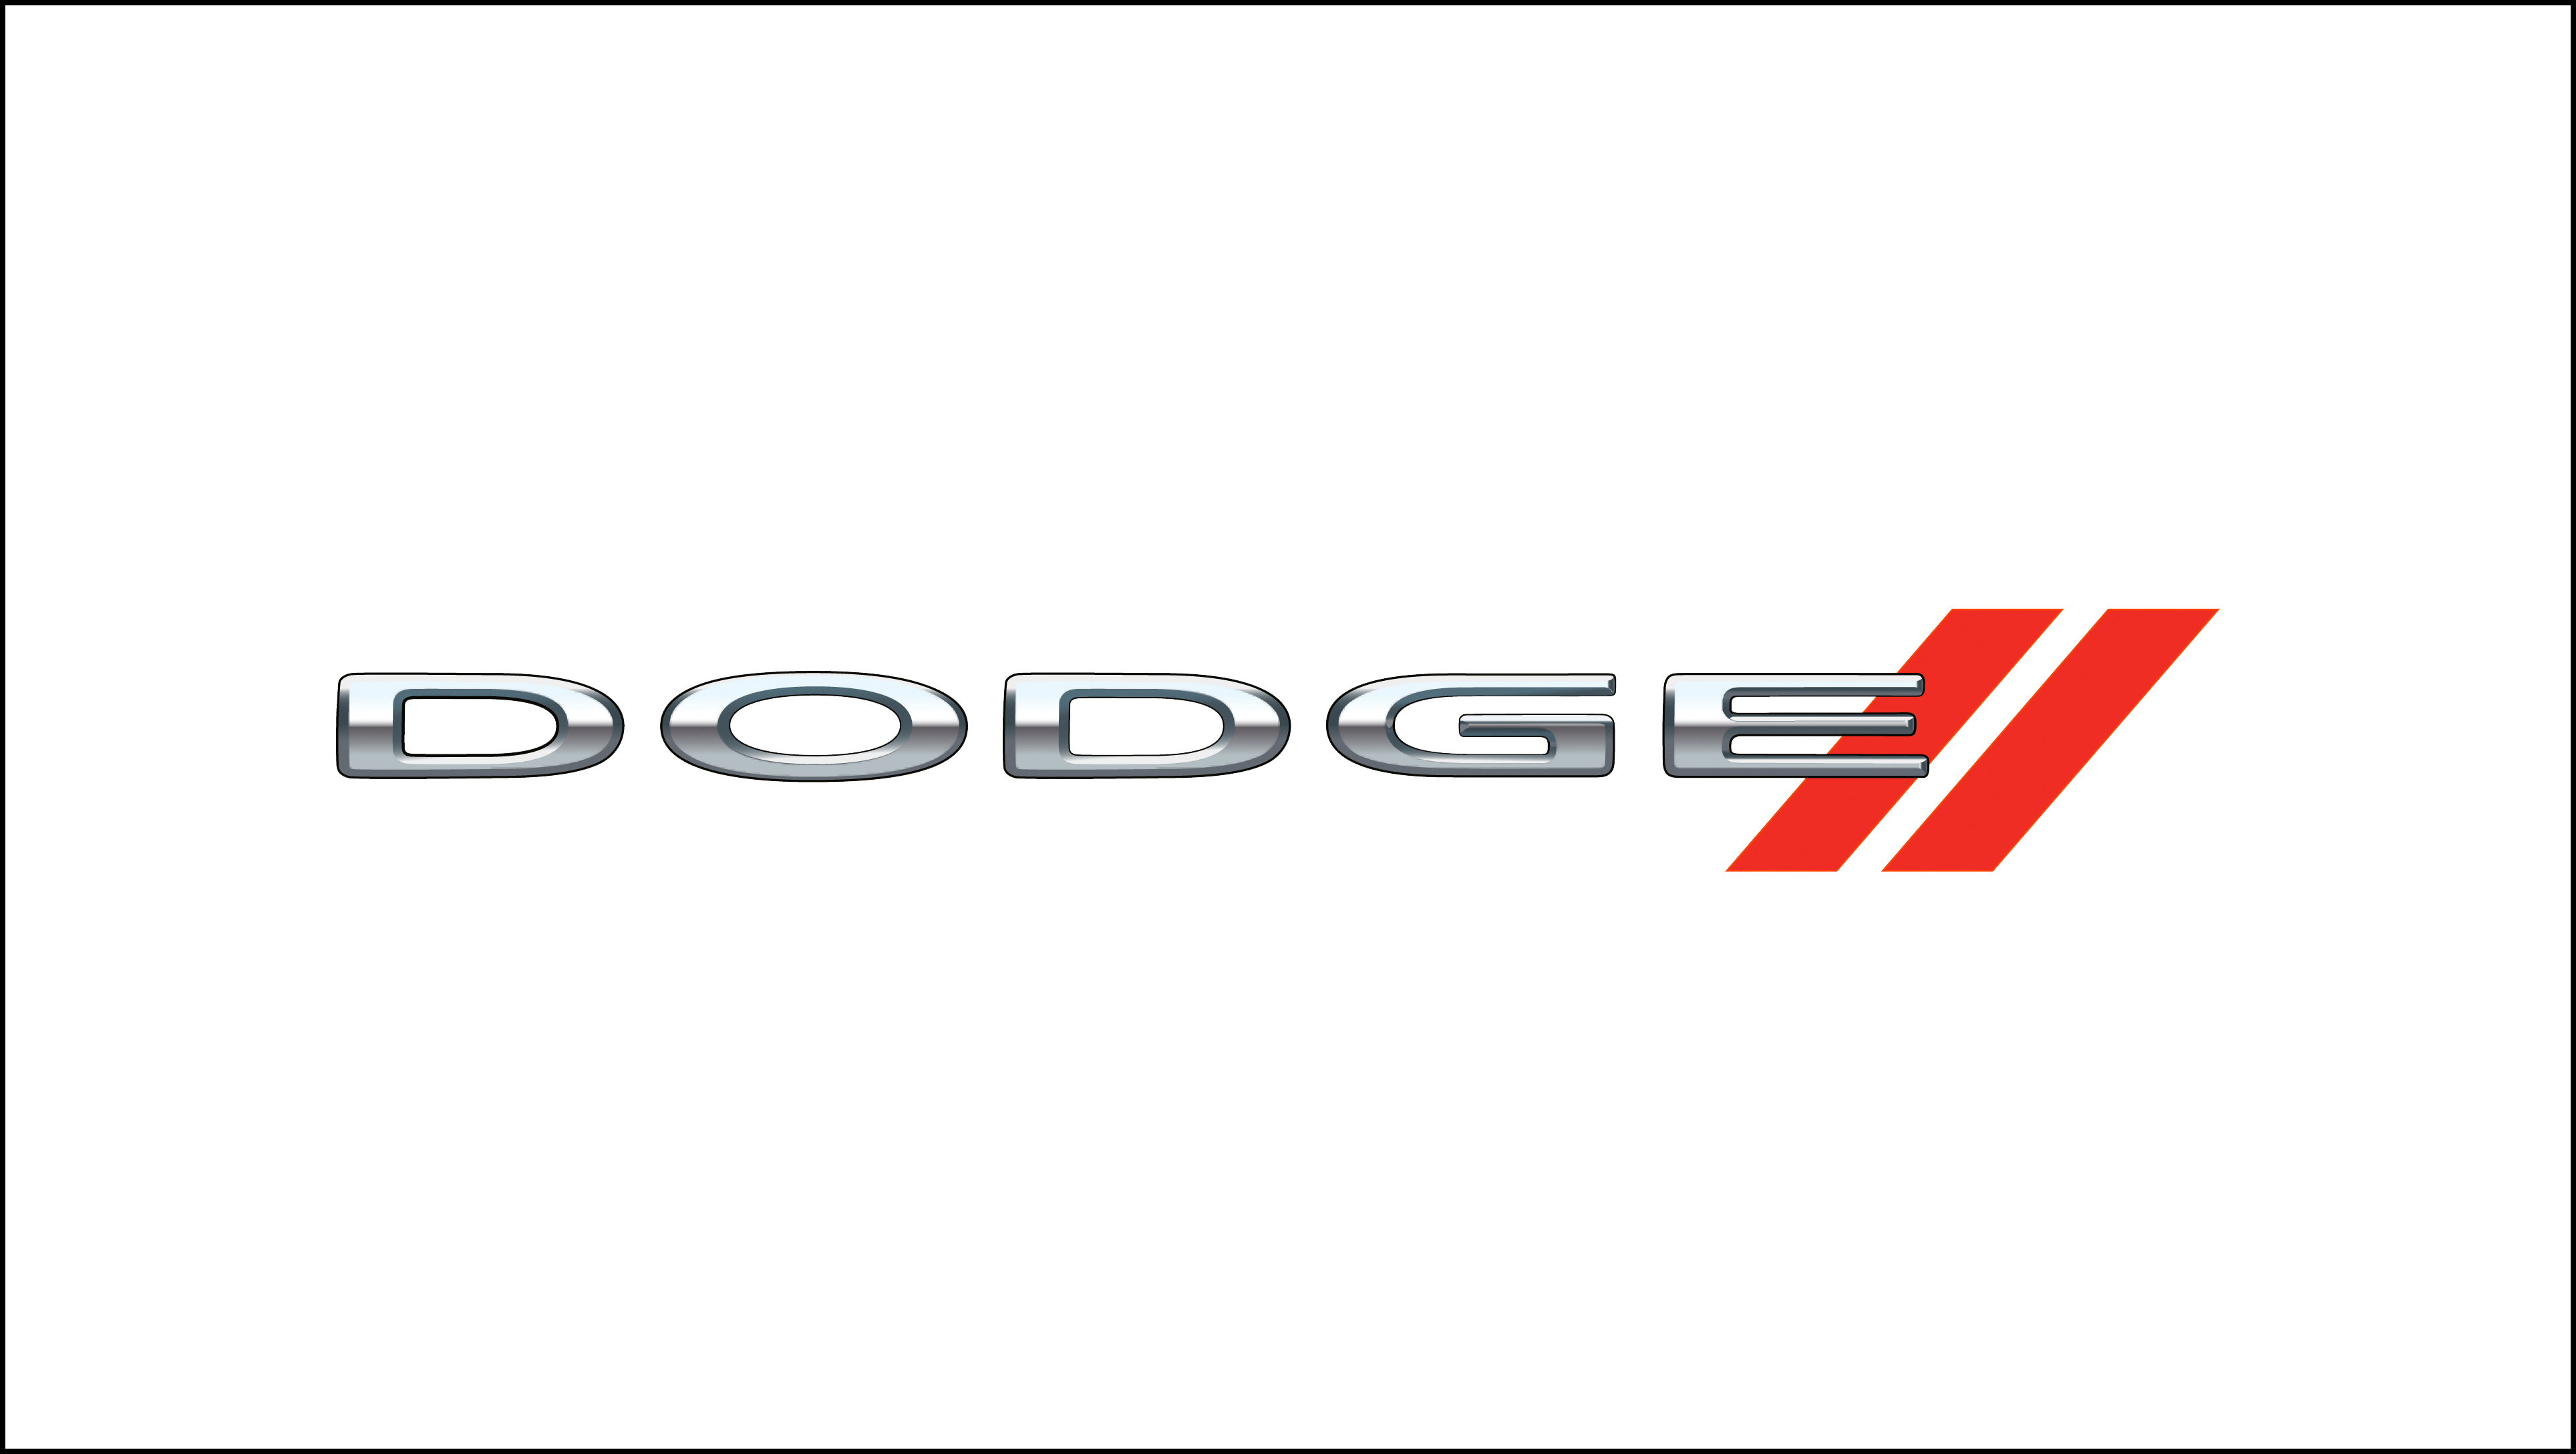 Dodge-logo-2011-3840x2160.png